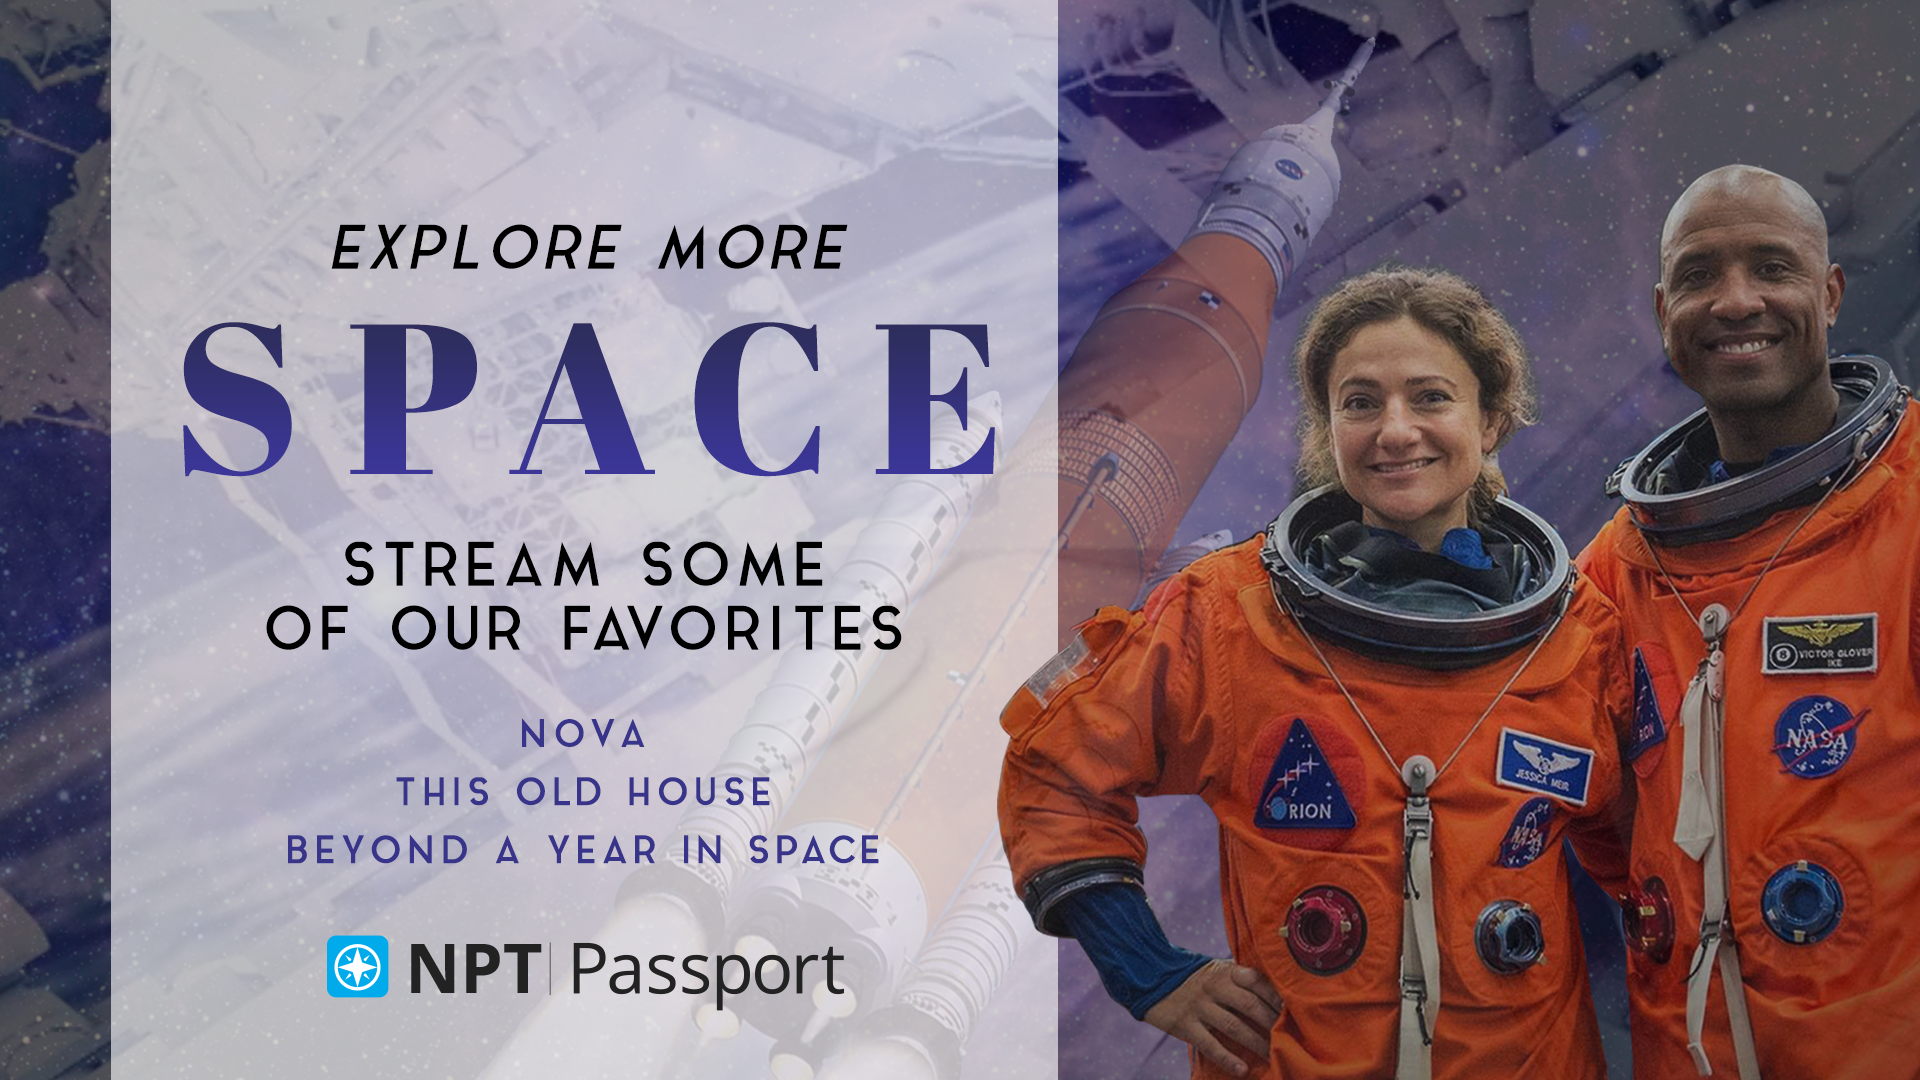 Explore More Space with NPT Passport